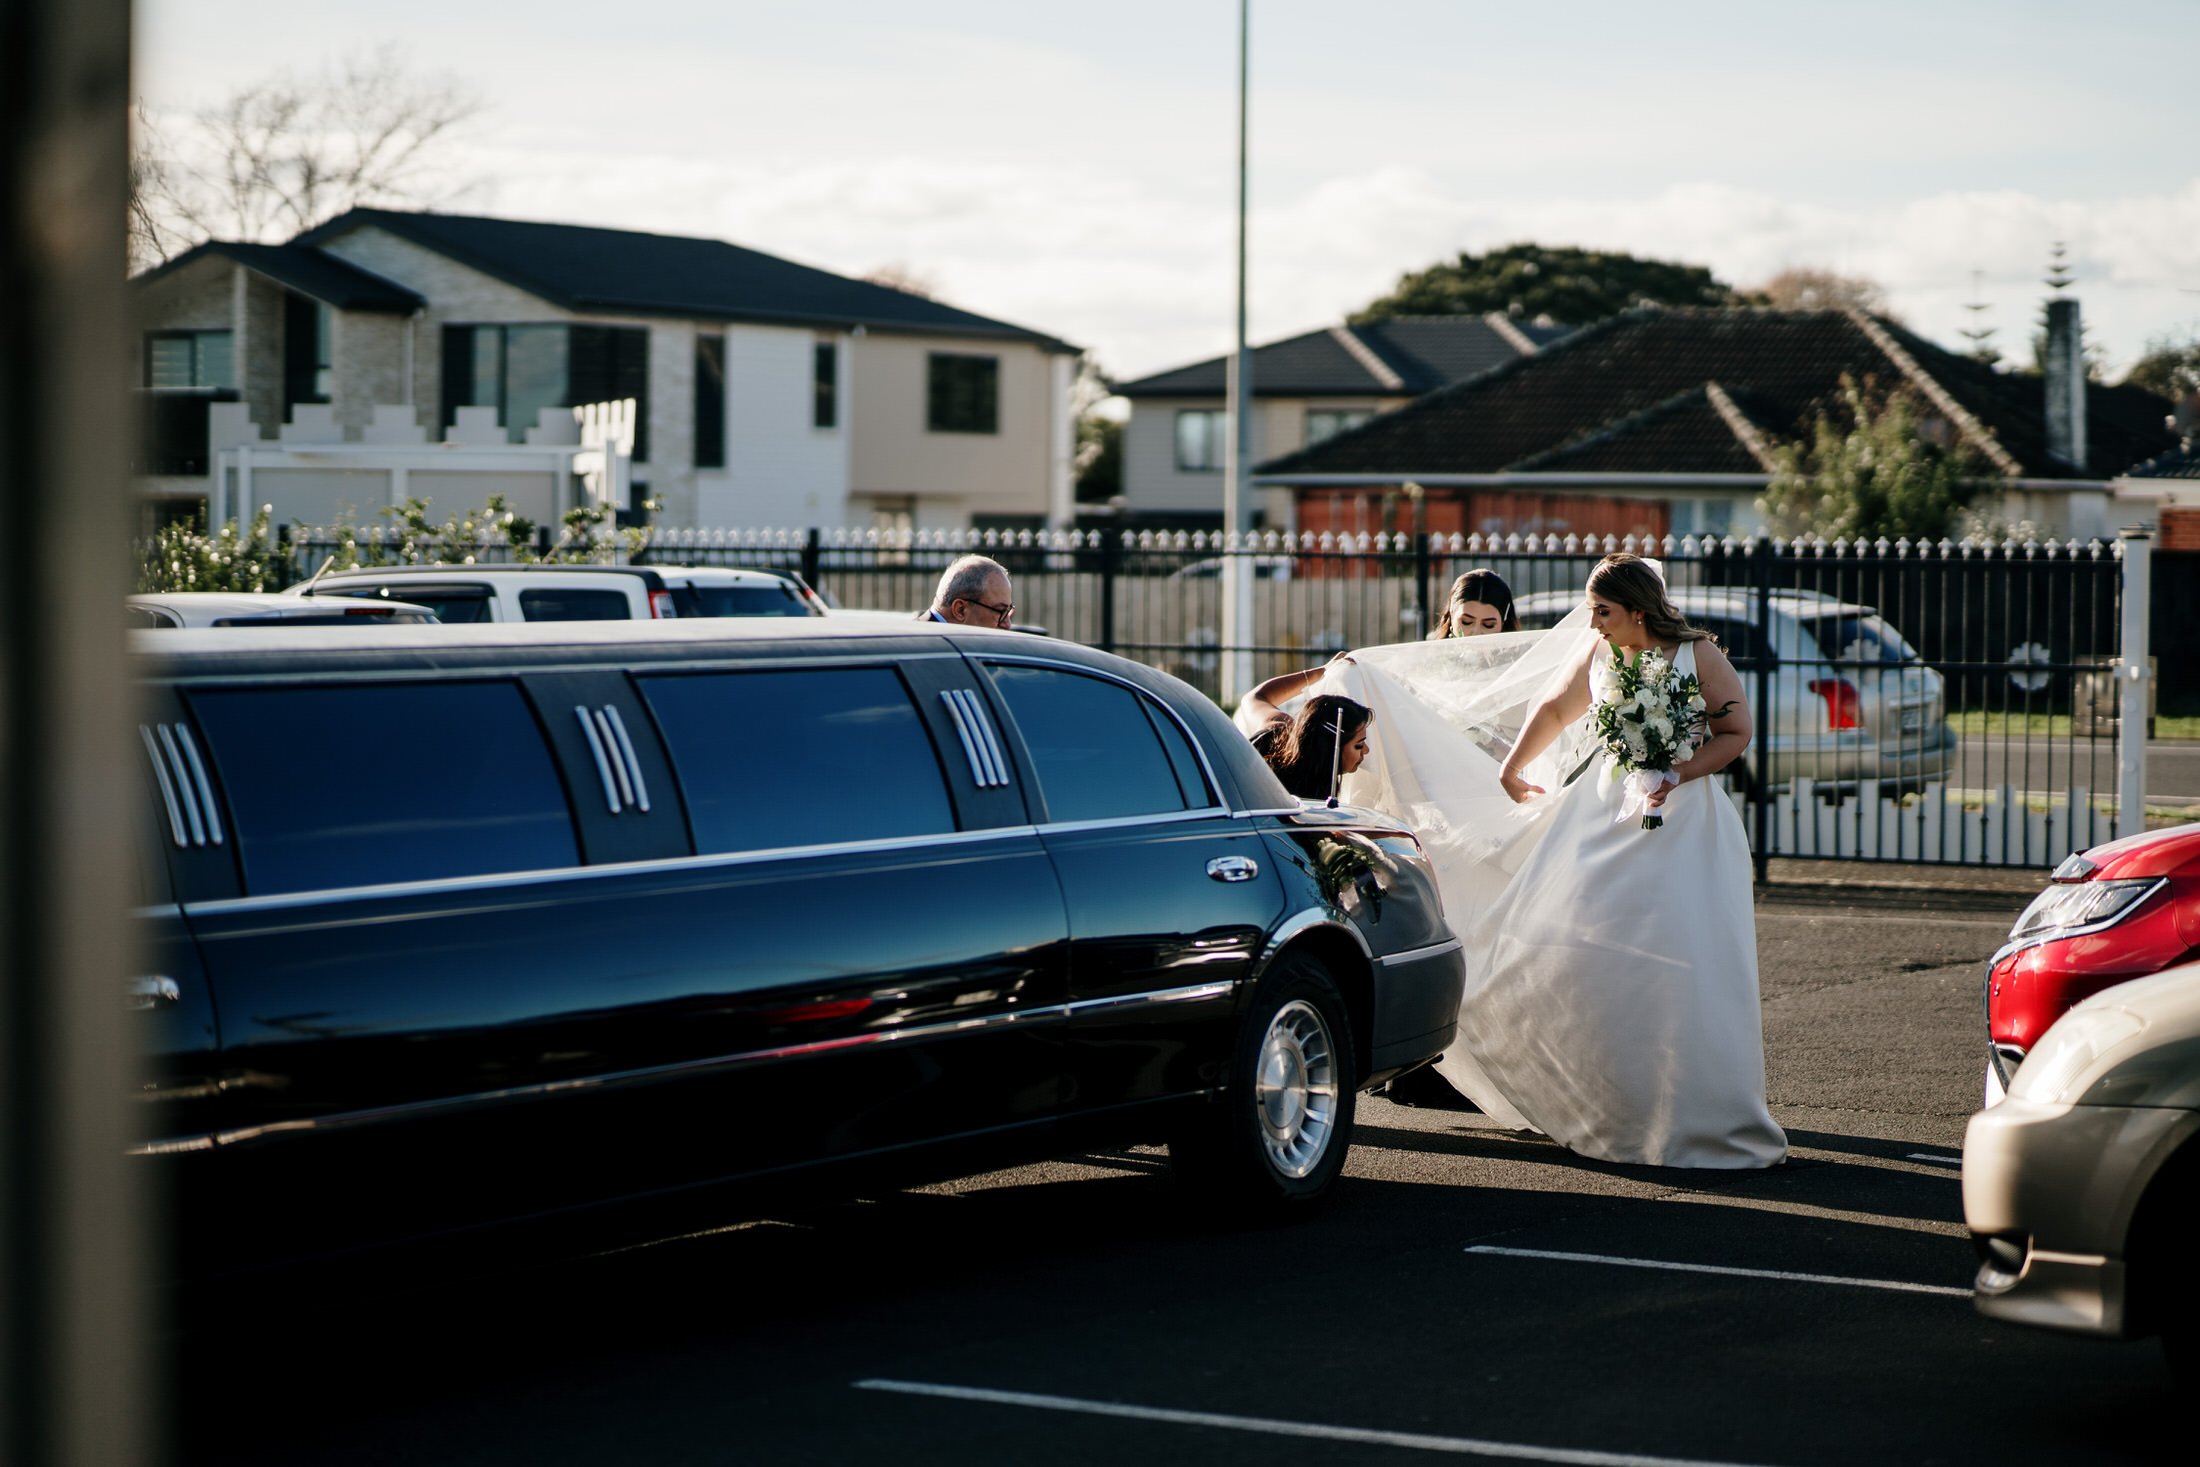 Auckland Wedding Photographer | Auckland Wedding Videographer | Auckland Wedding Venue | Bracu Estate Venue | South Auckland Venue | Auckland Photographer | Church Wedding